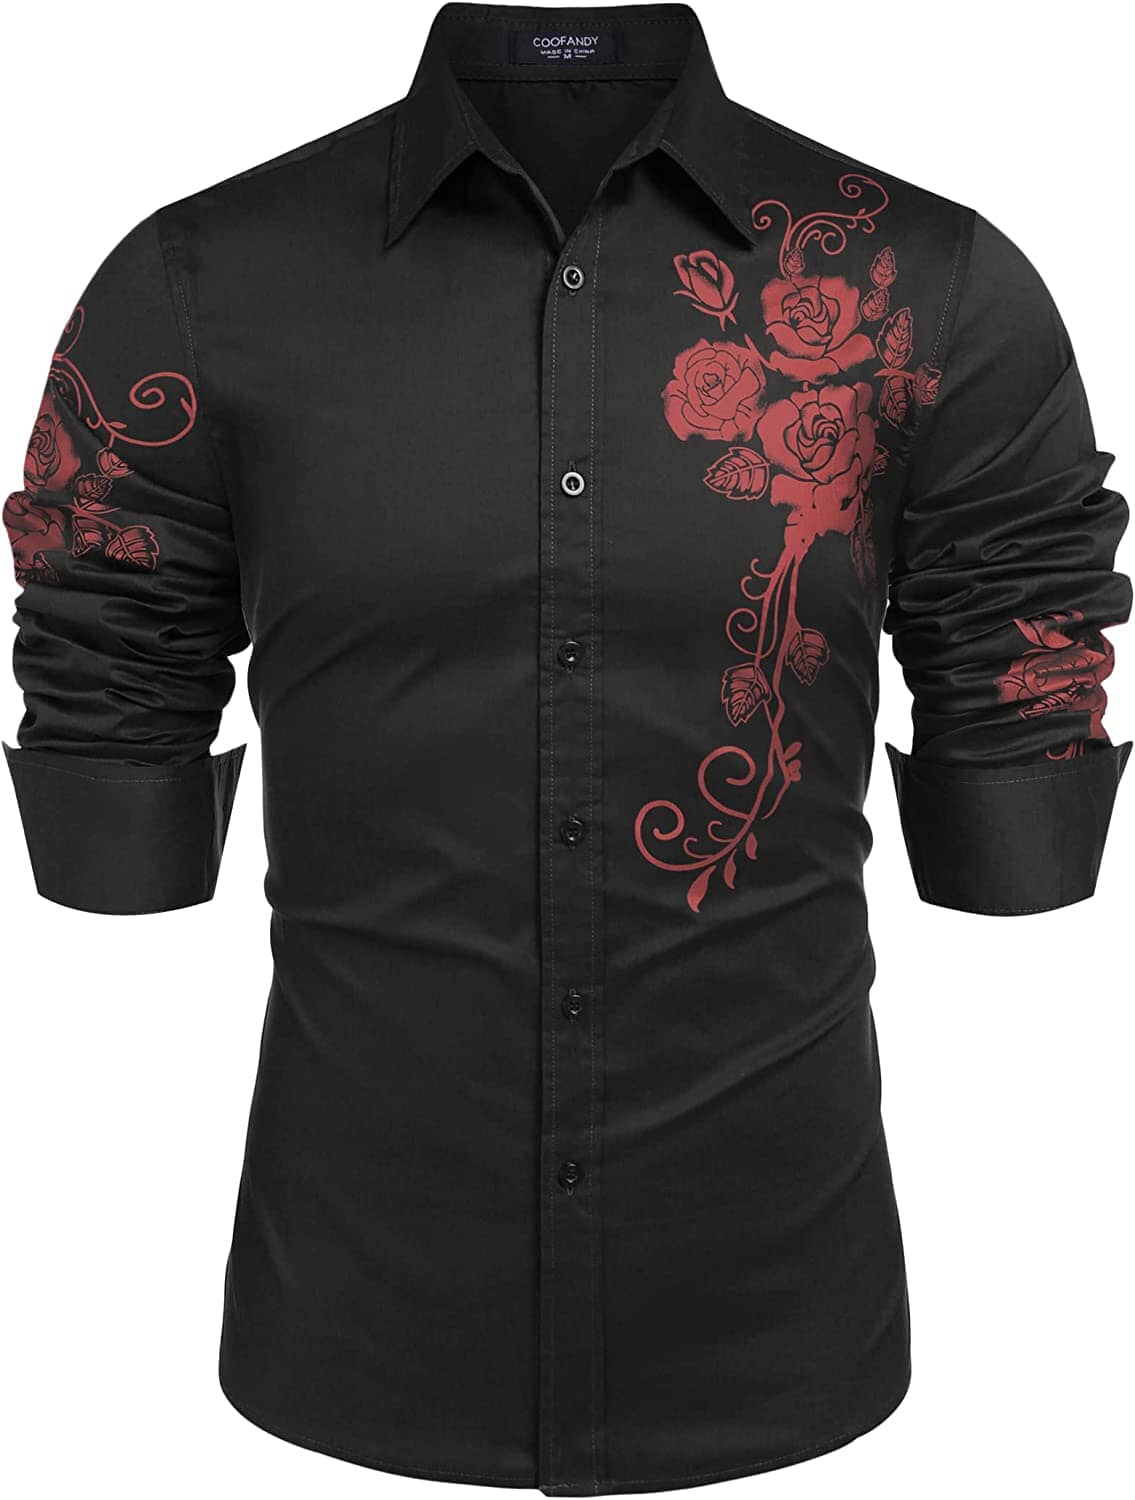 Rose Printed Slim Fit Dress Shirts (US Only) Shirts coofandy Black S 